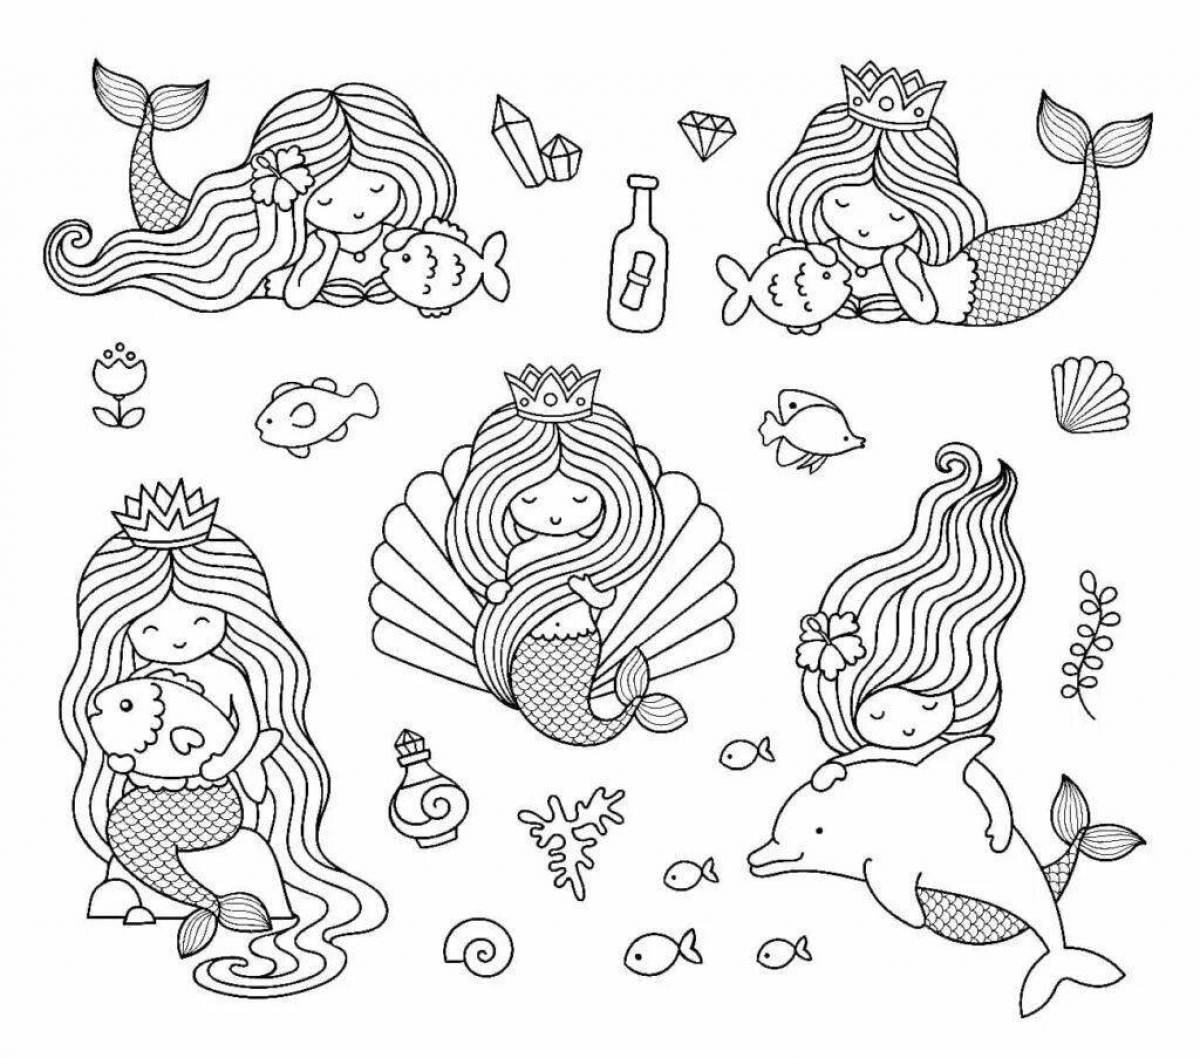 Joyful little mermaid coloring book